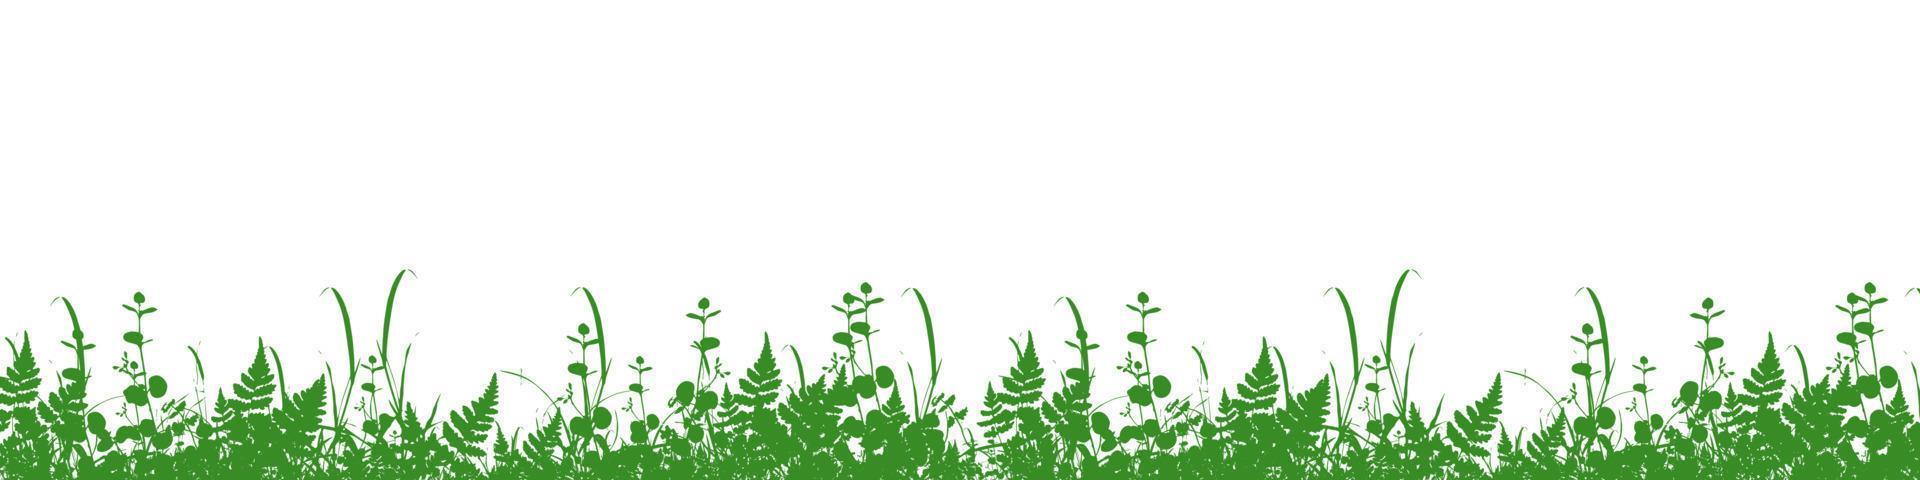 vector groen gras silhouet. gras herhalen achtergrond. groen gras silhouet achtergrond. vector illustratie